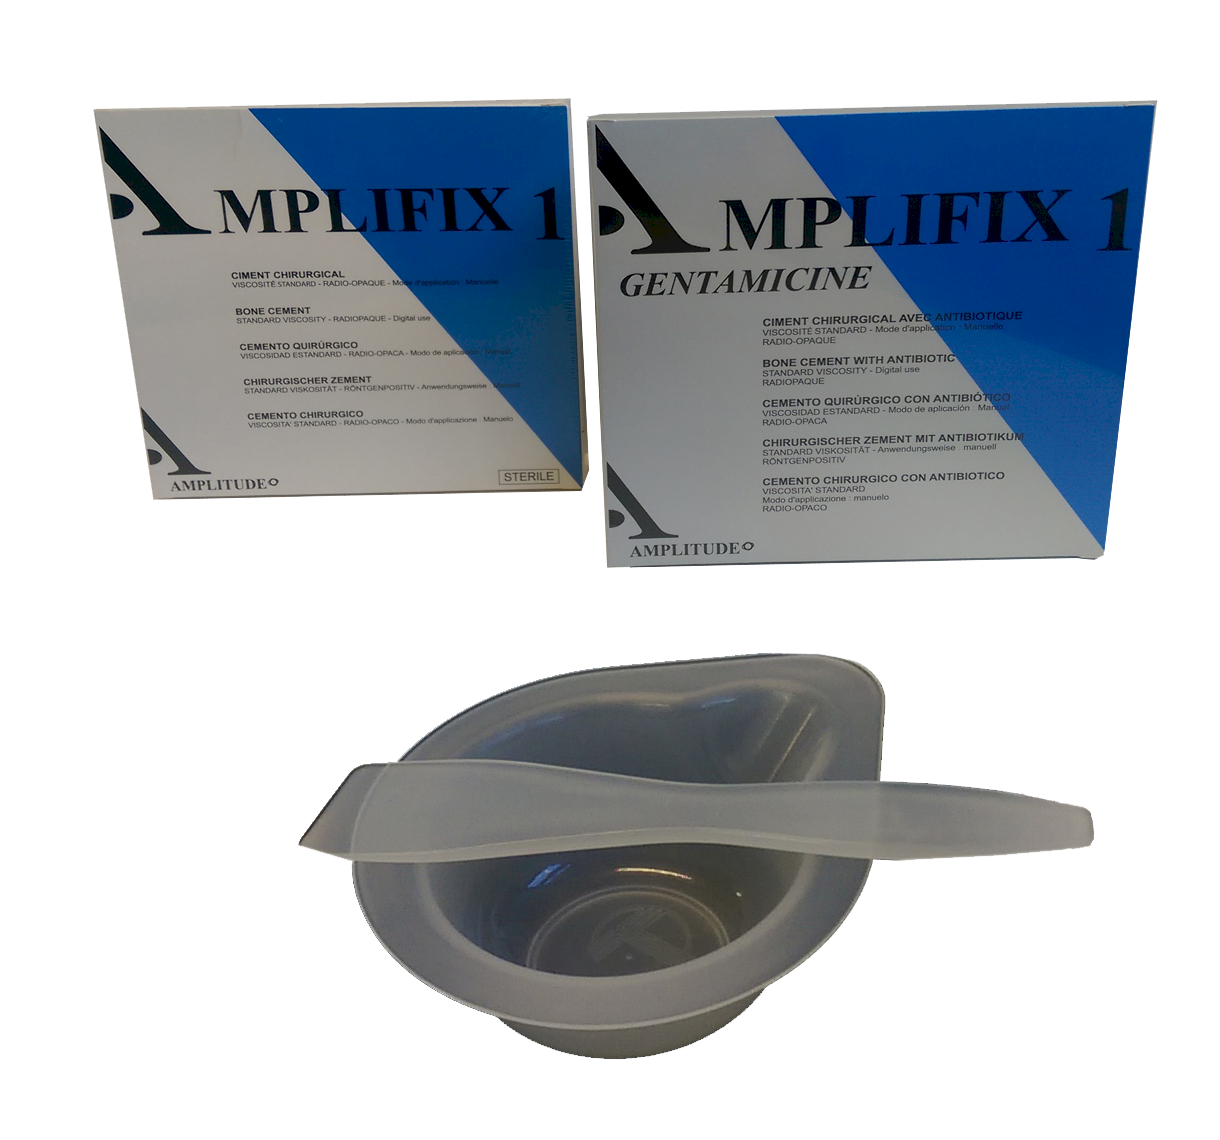 AMPLIFIX® 1 et AMPLIFIX® 1 avec Gentamicine-2